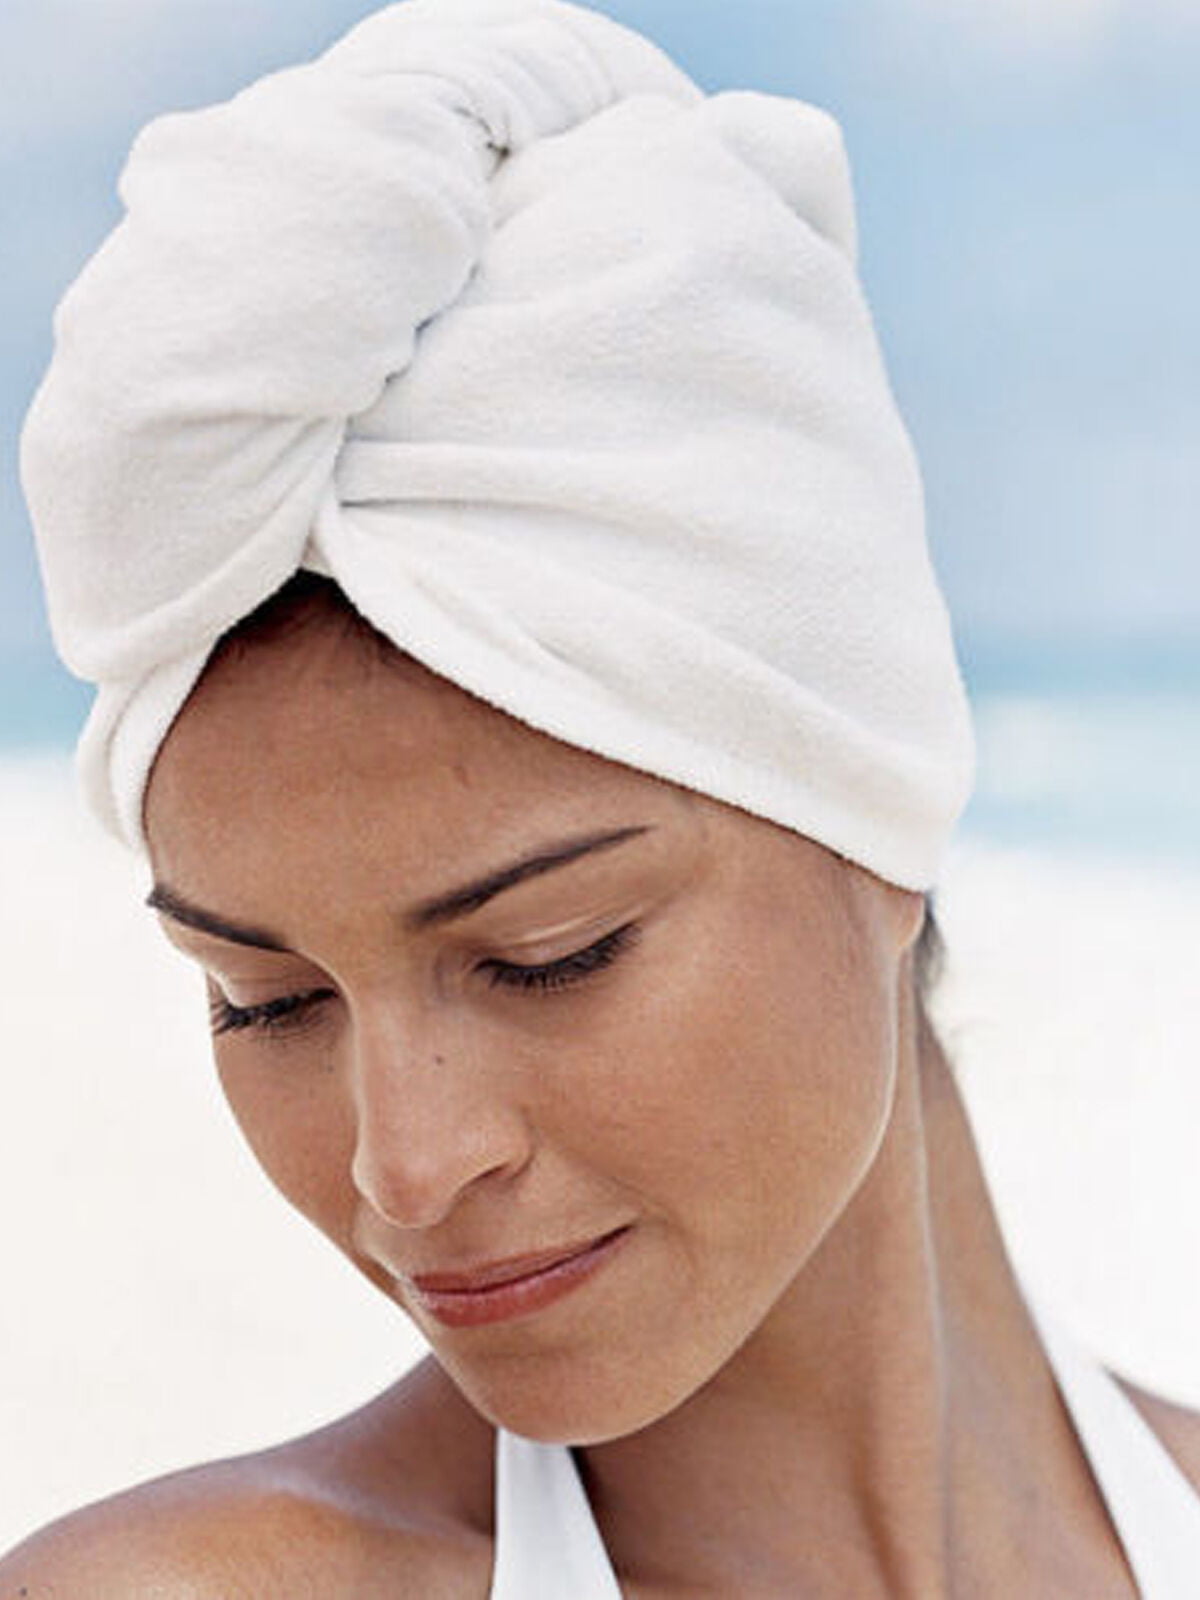 Microfiber Towel Quick Dry Hair Drying Turban Wrap Hat Caps Spa Hand towel BS 